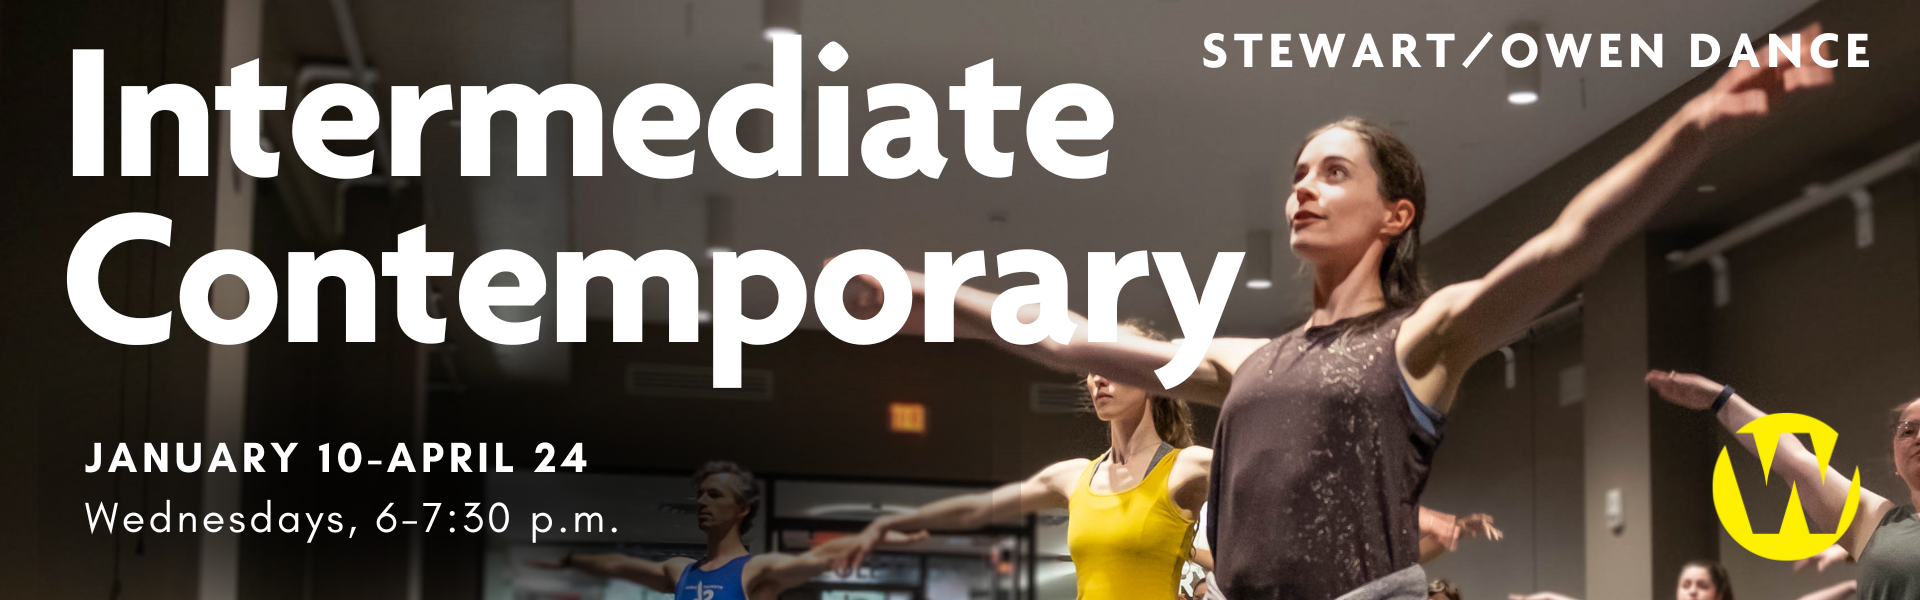 Intermediate Contemporary with Stewart/Owen Dance. Wednesdays, January 10–April 24, 6–7:30 p.m.